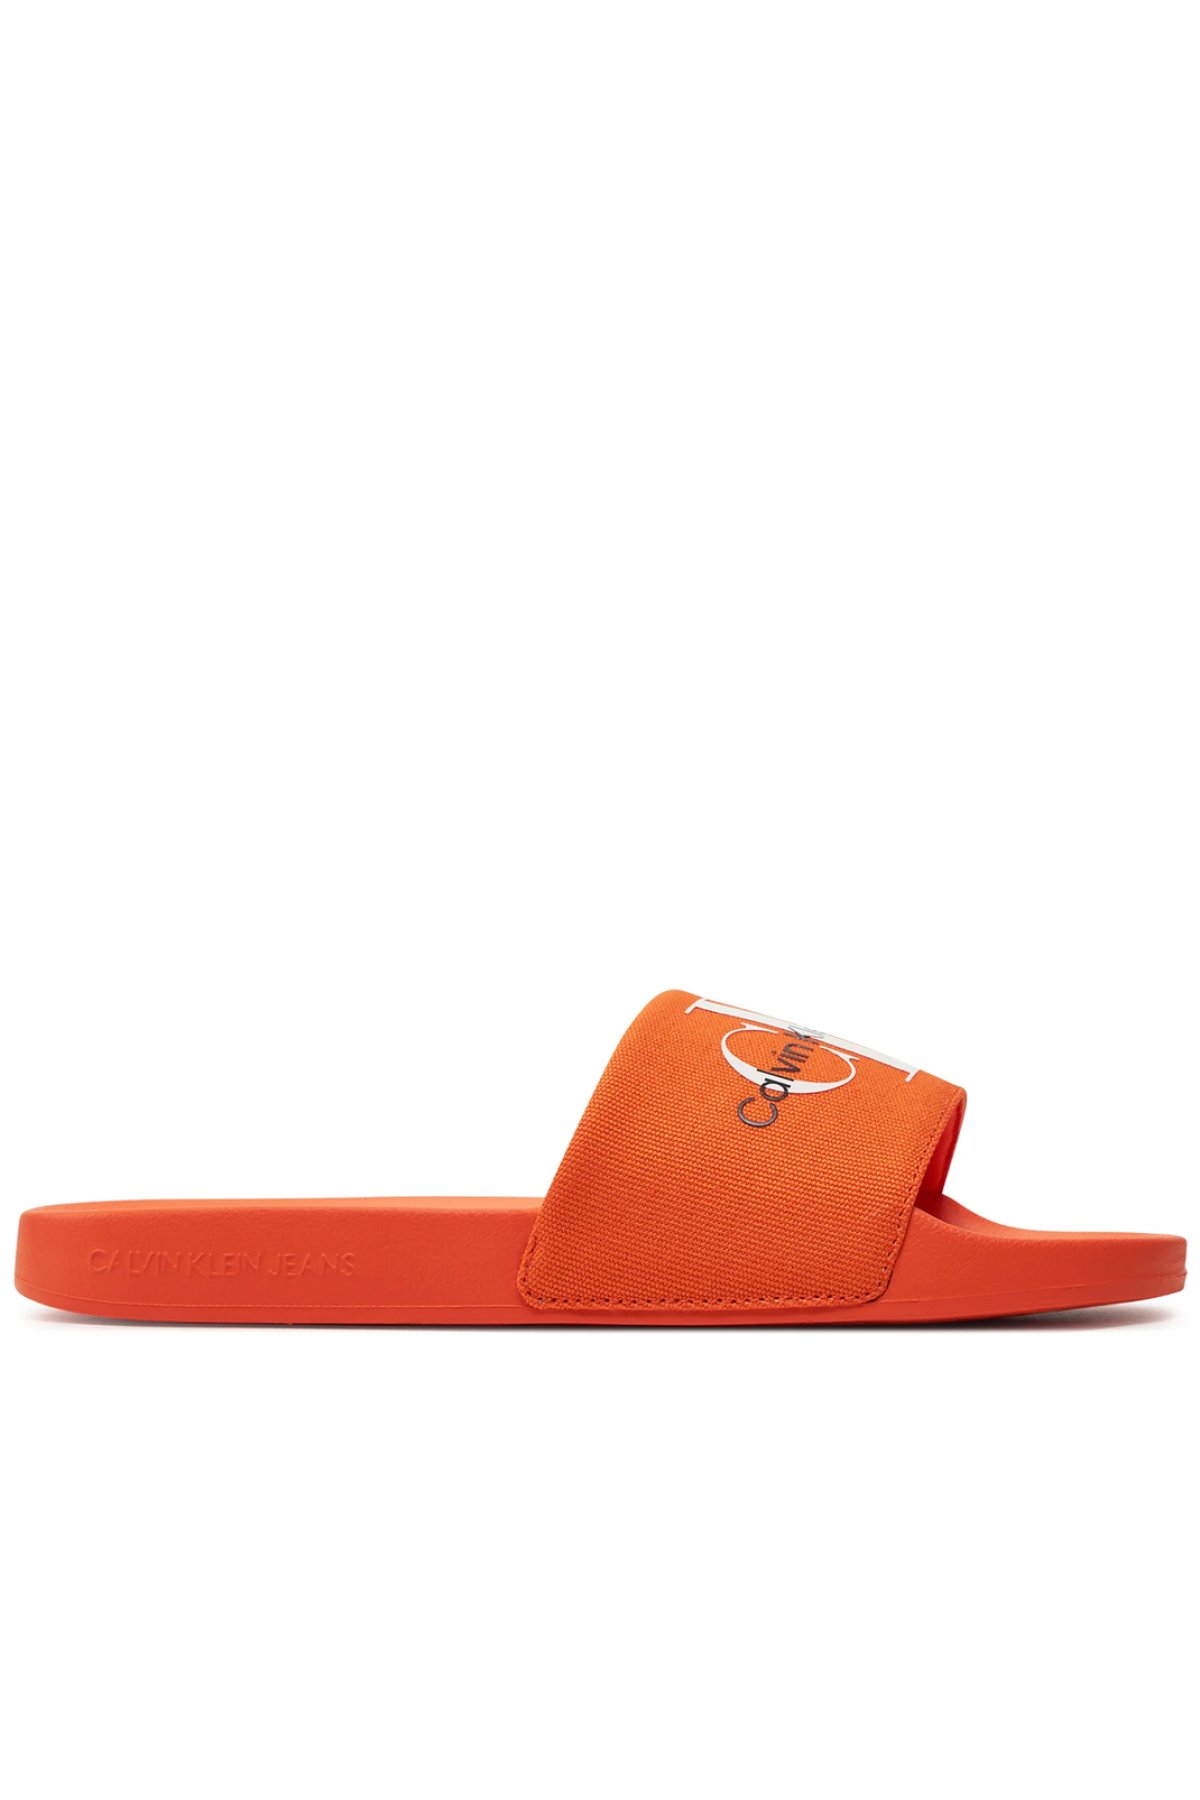 Calvin Klein YM0YM00061 pantofle oranžové